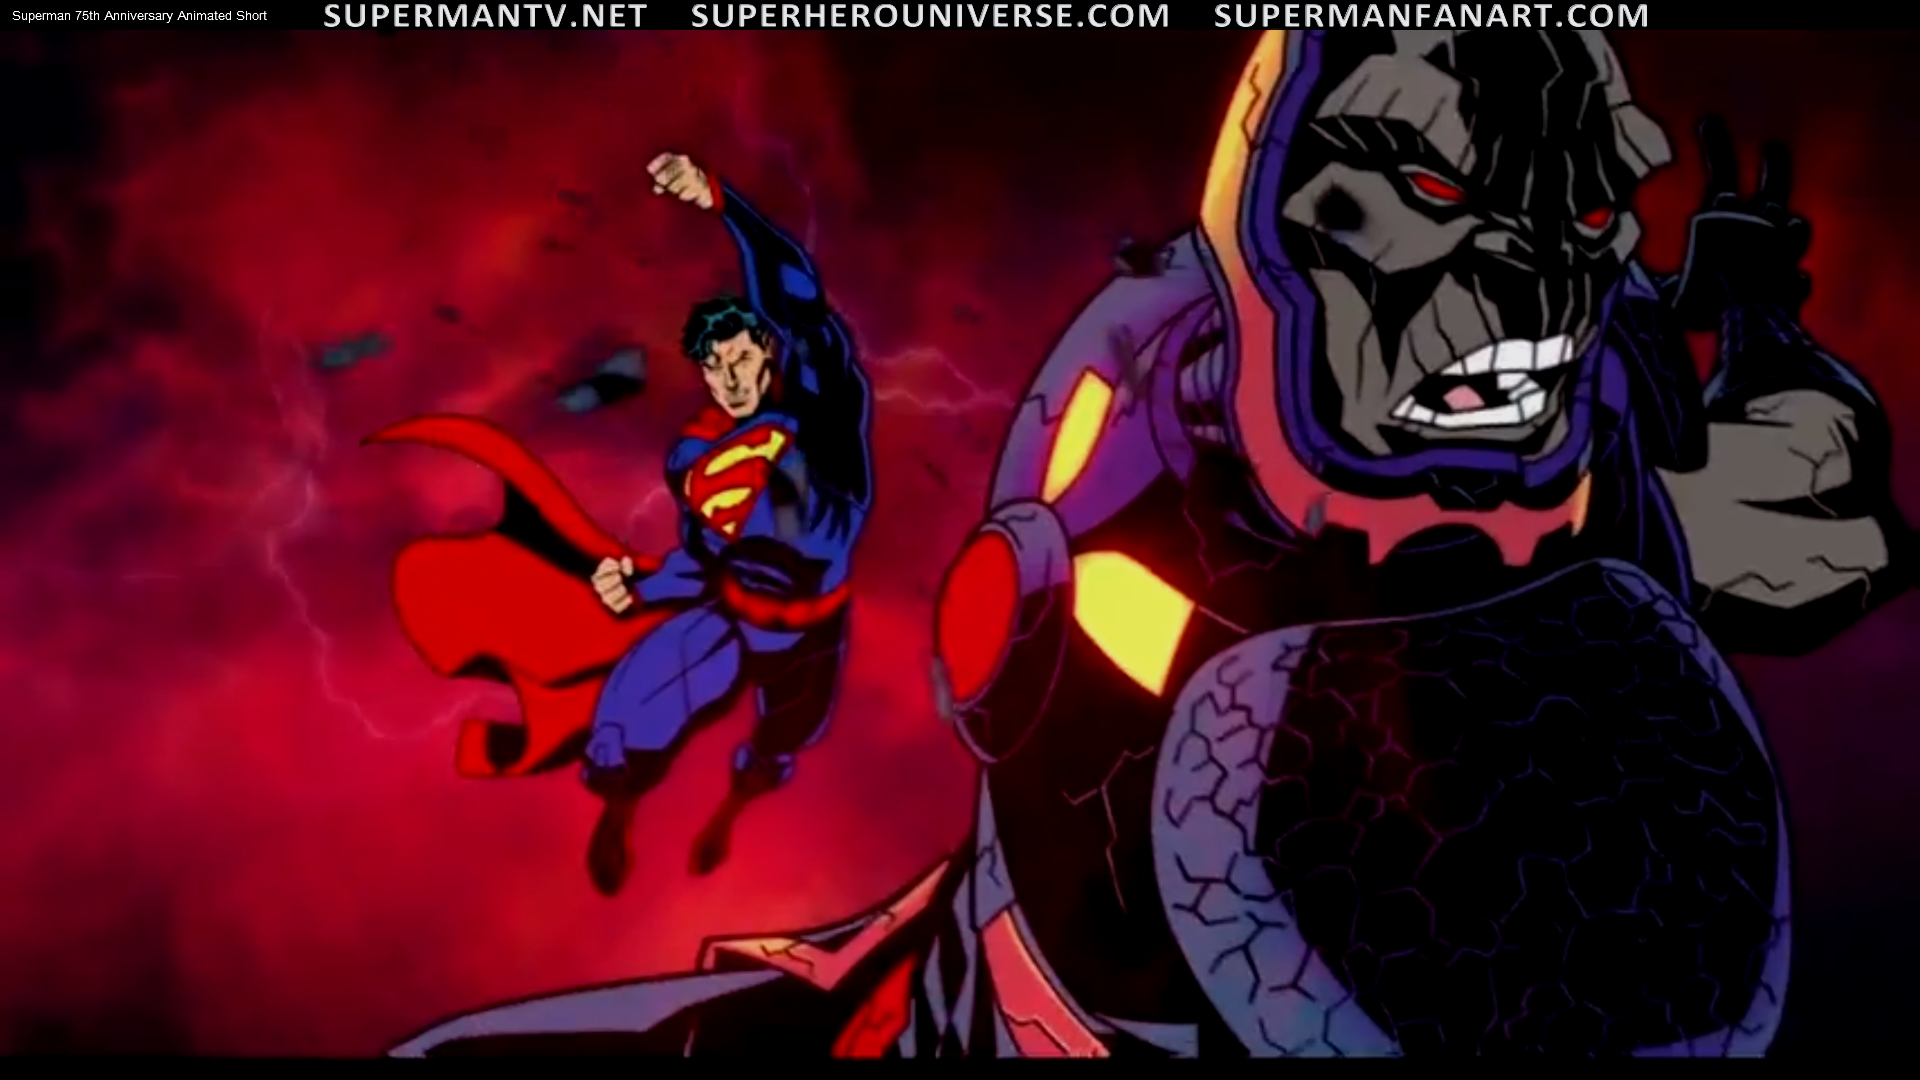 Superman punches darkseid